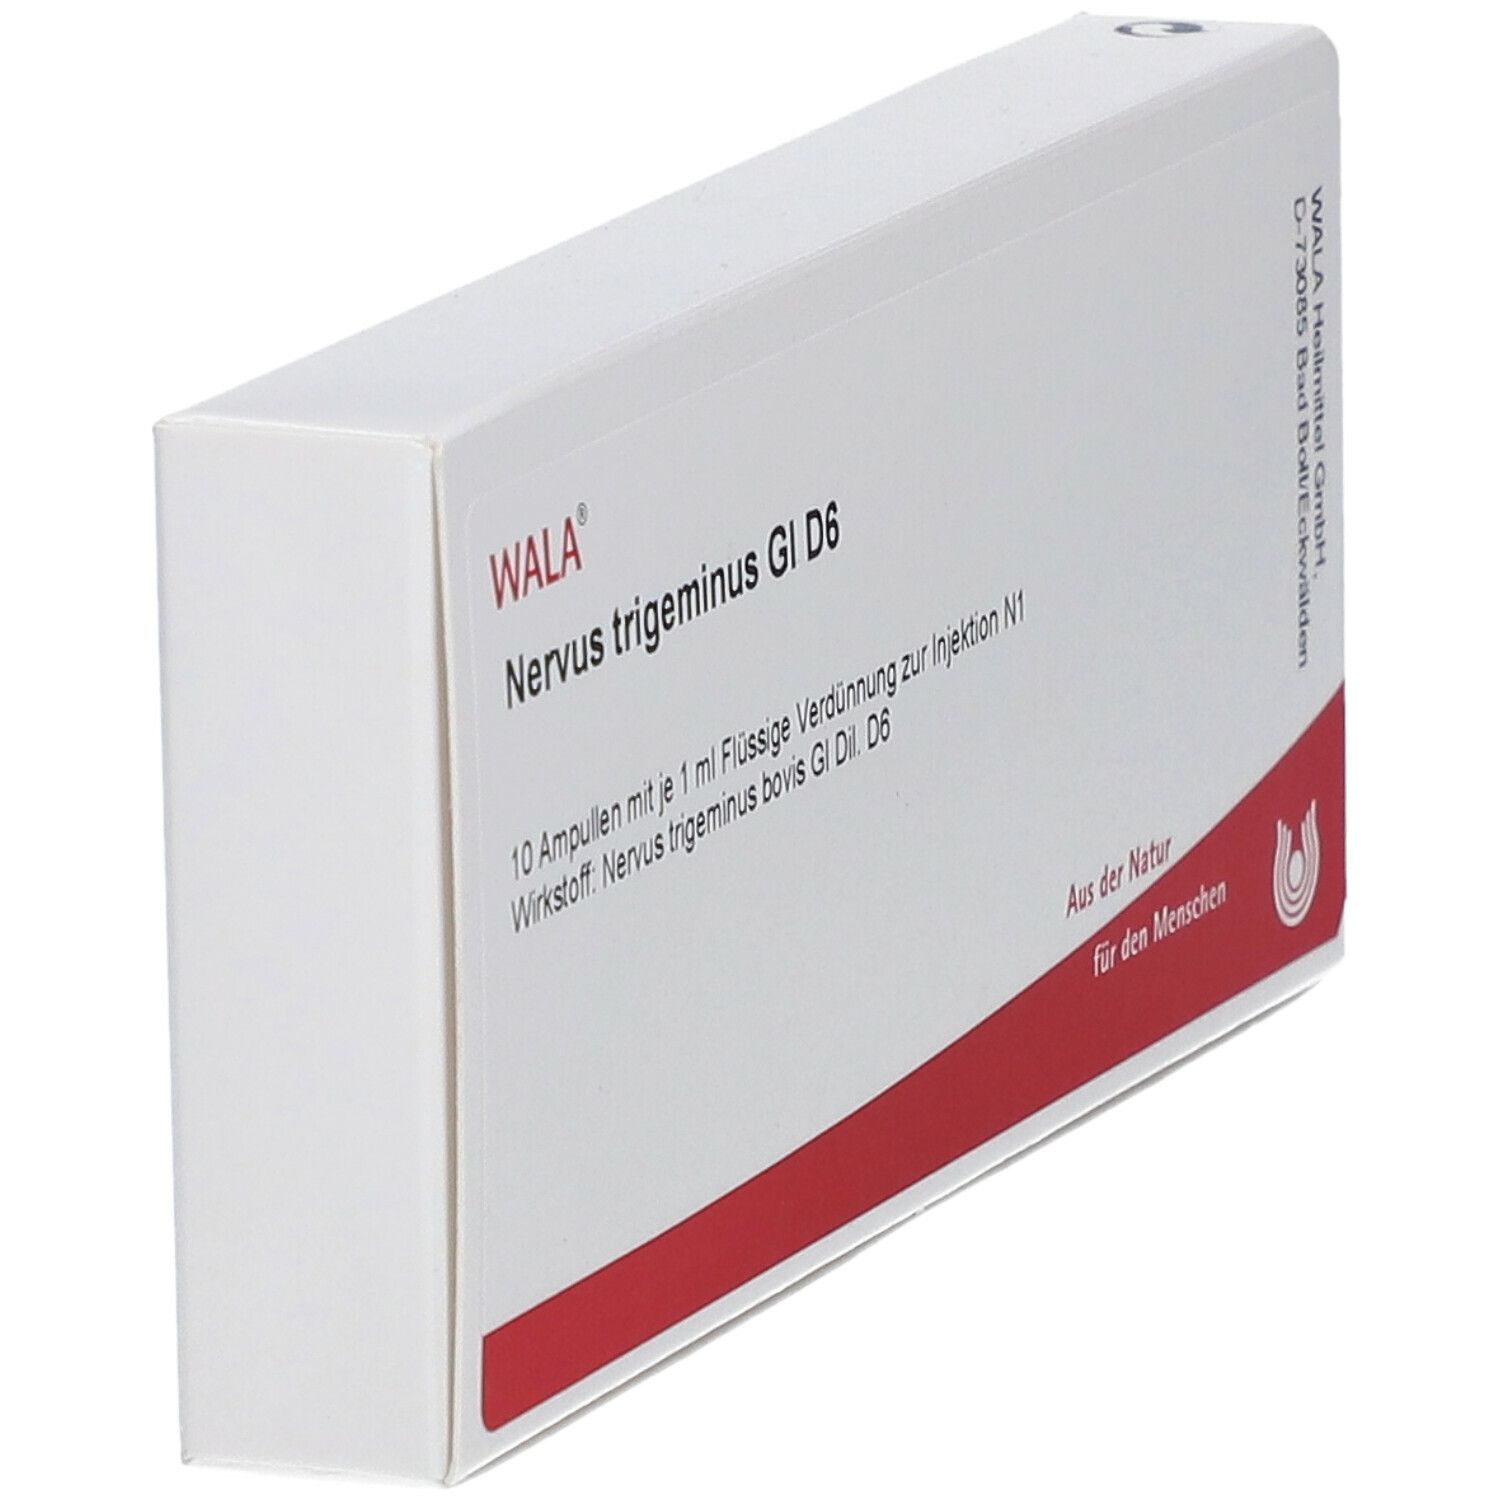 WALA® Nervus Trigeminus Gl D 6 Amp.